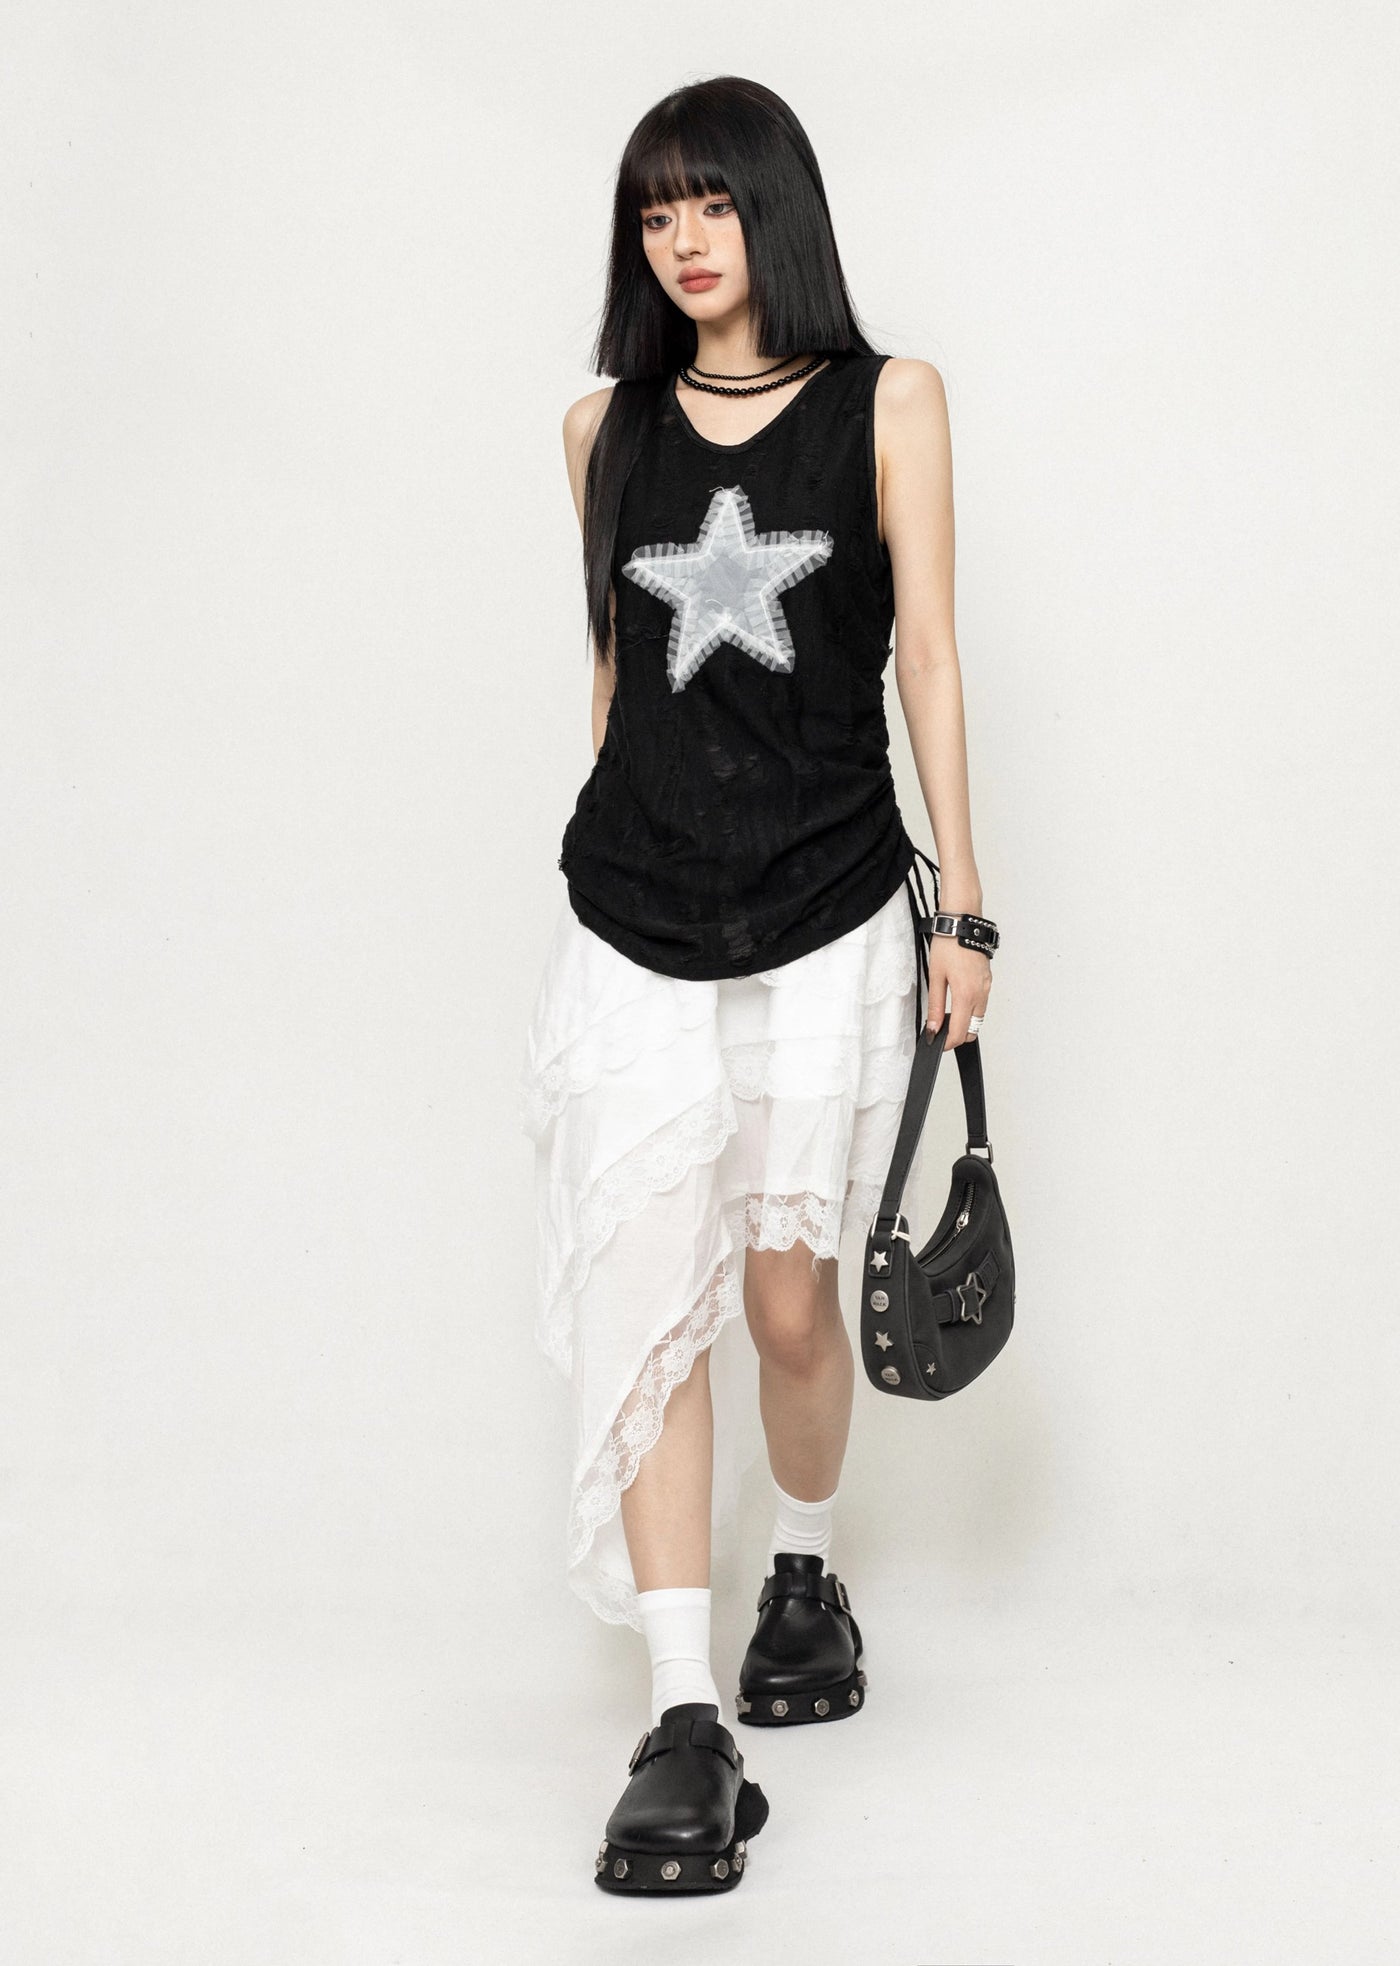 【ZERO STORE】Asymmetric silhouette design white collar skirt  ZS0027